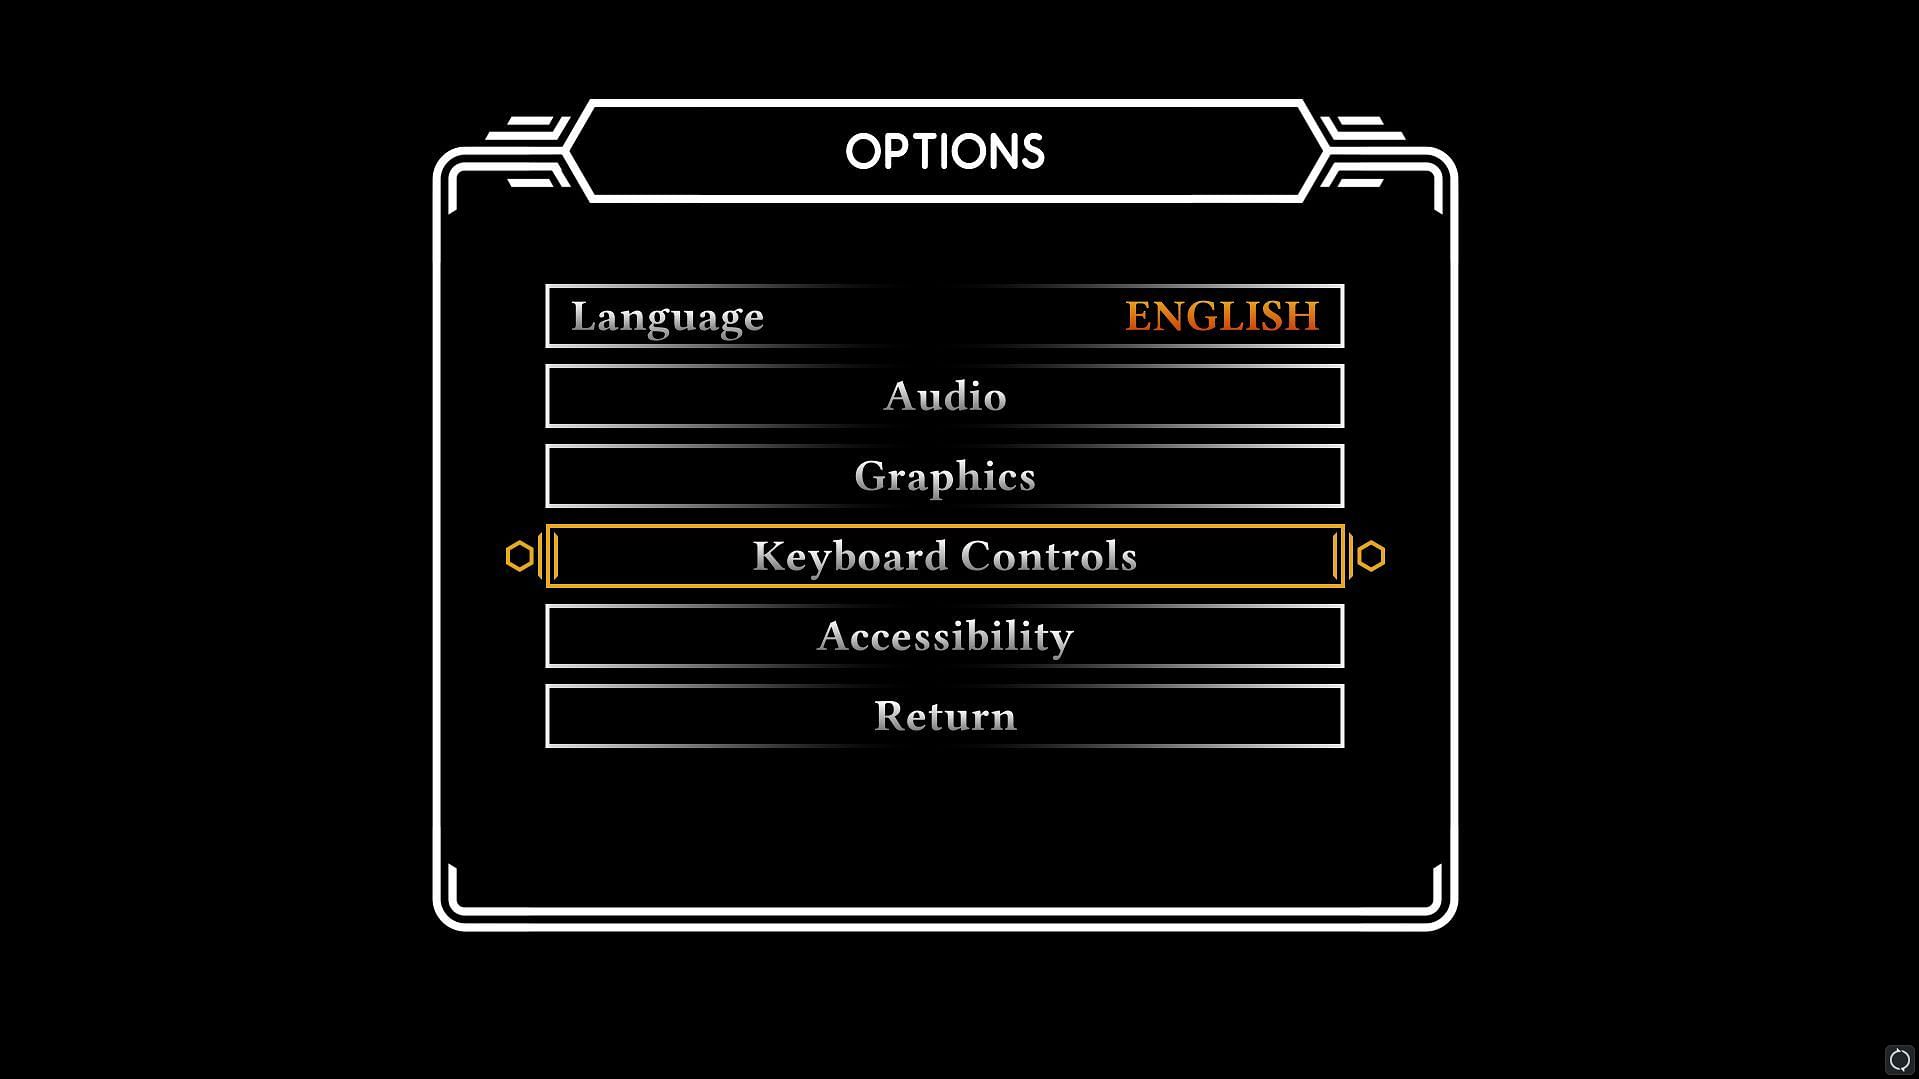 Only keyboard controls are shown in the settings menu (Screenshot via TUNIC)